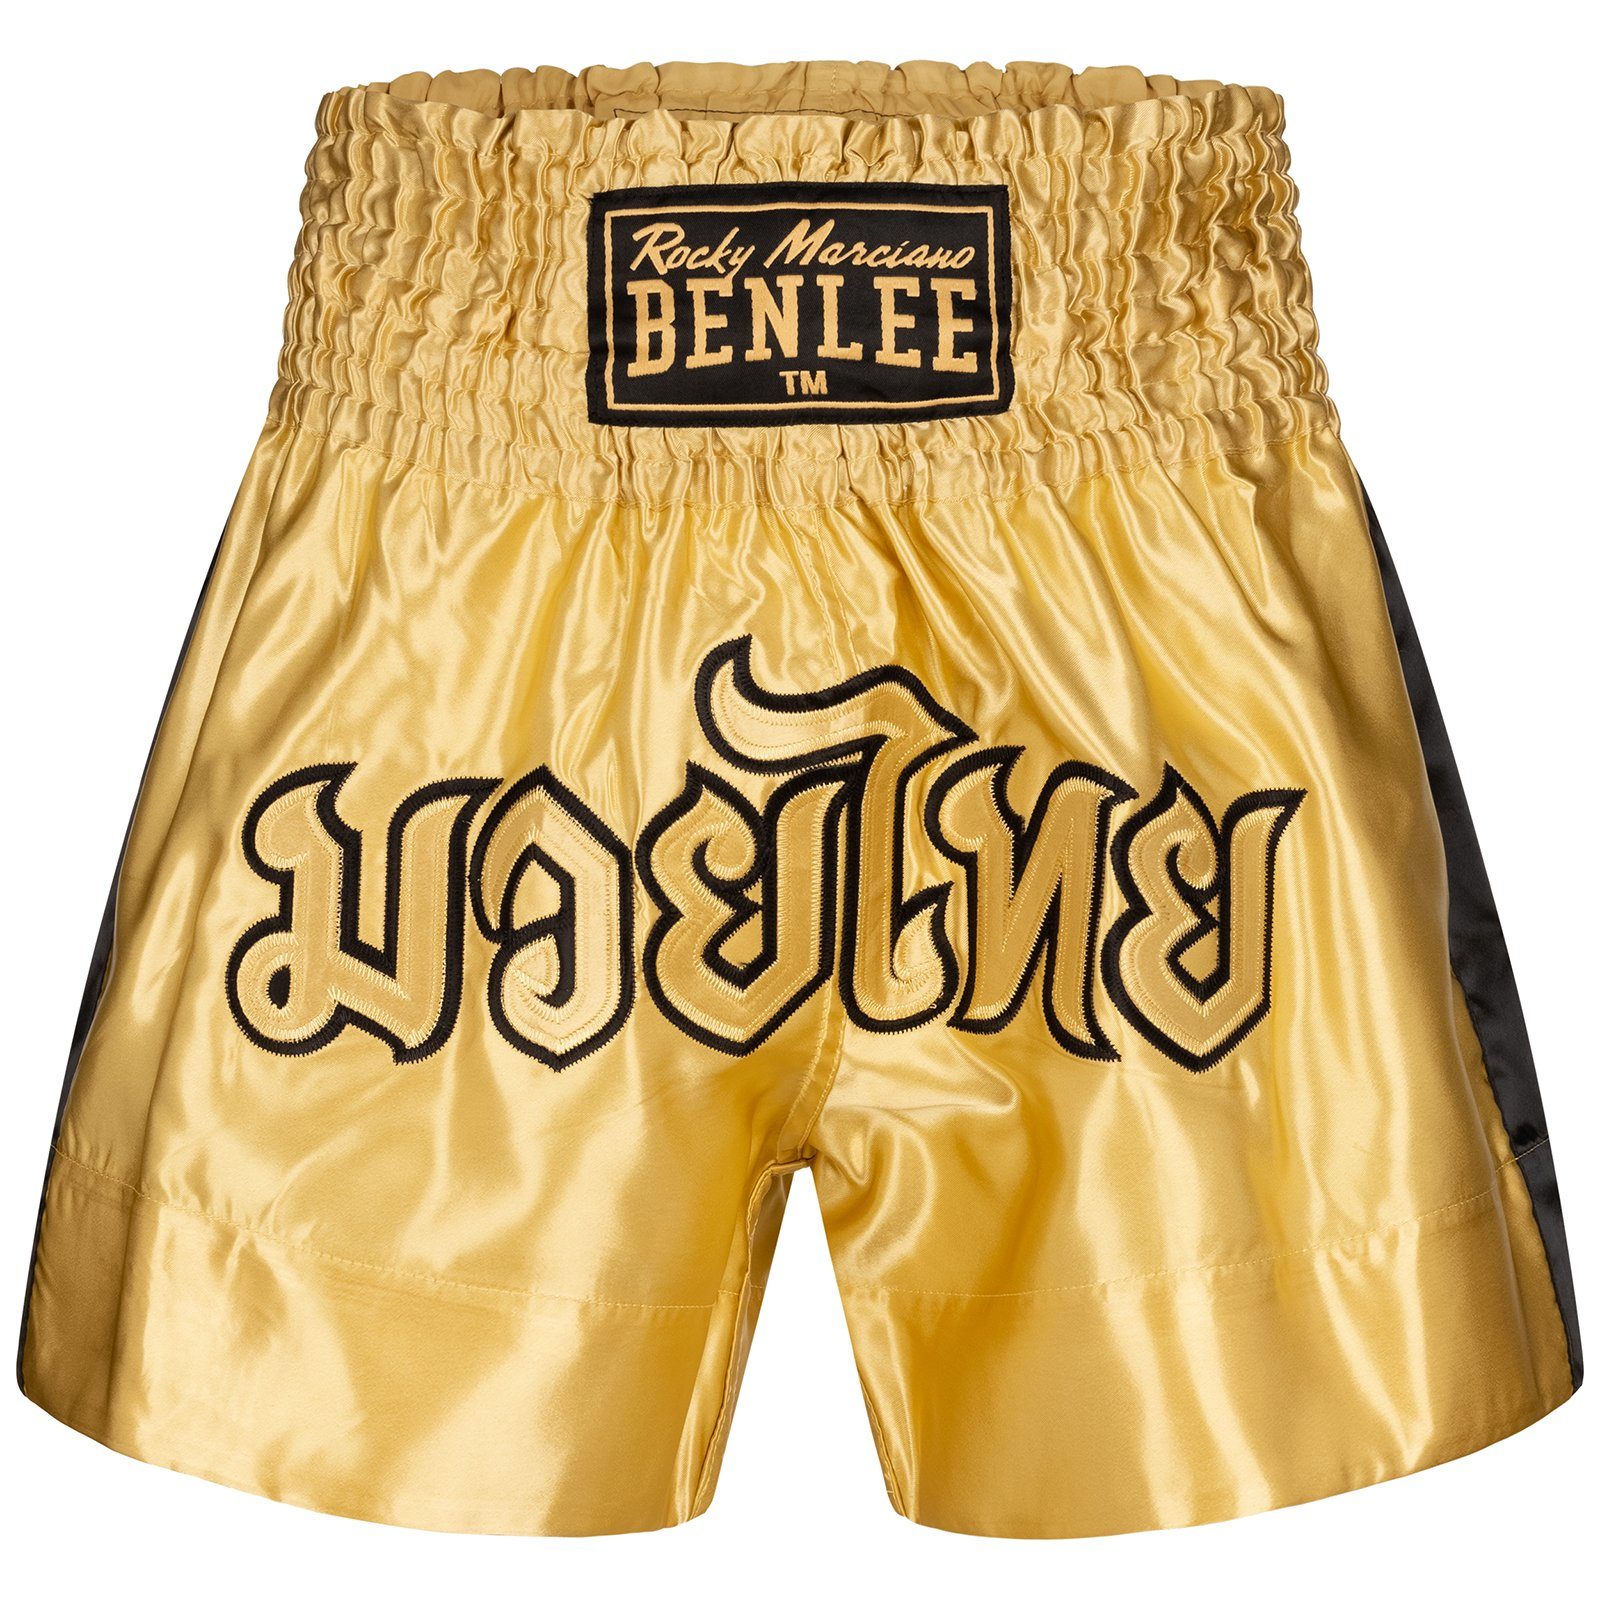 Boxshorts Rocky gold/black Herren Benlee Marciano Benlee Goldy Thai Sporthose